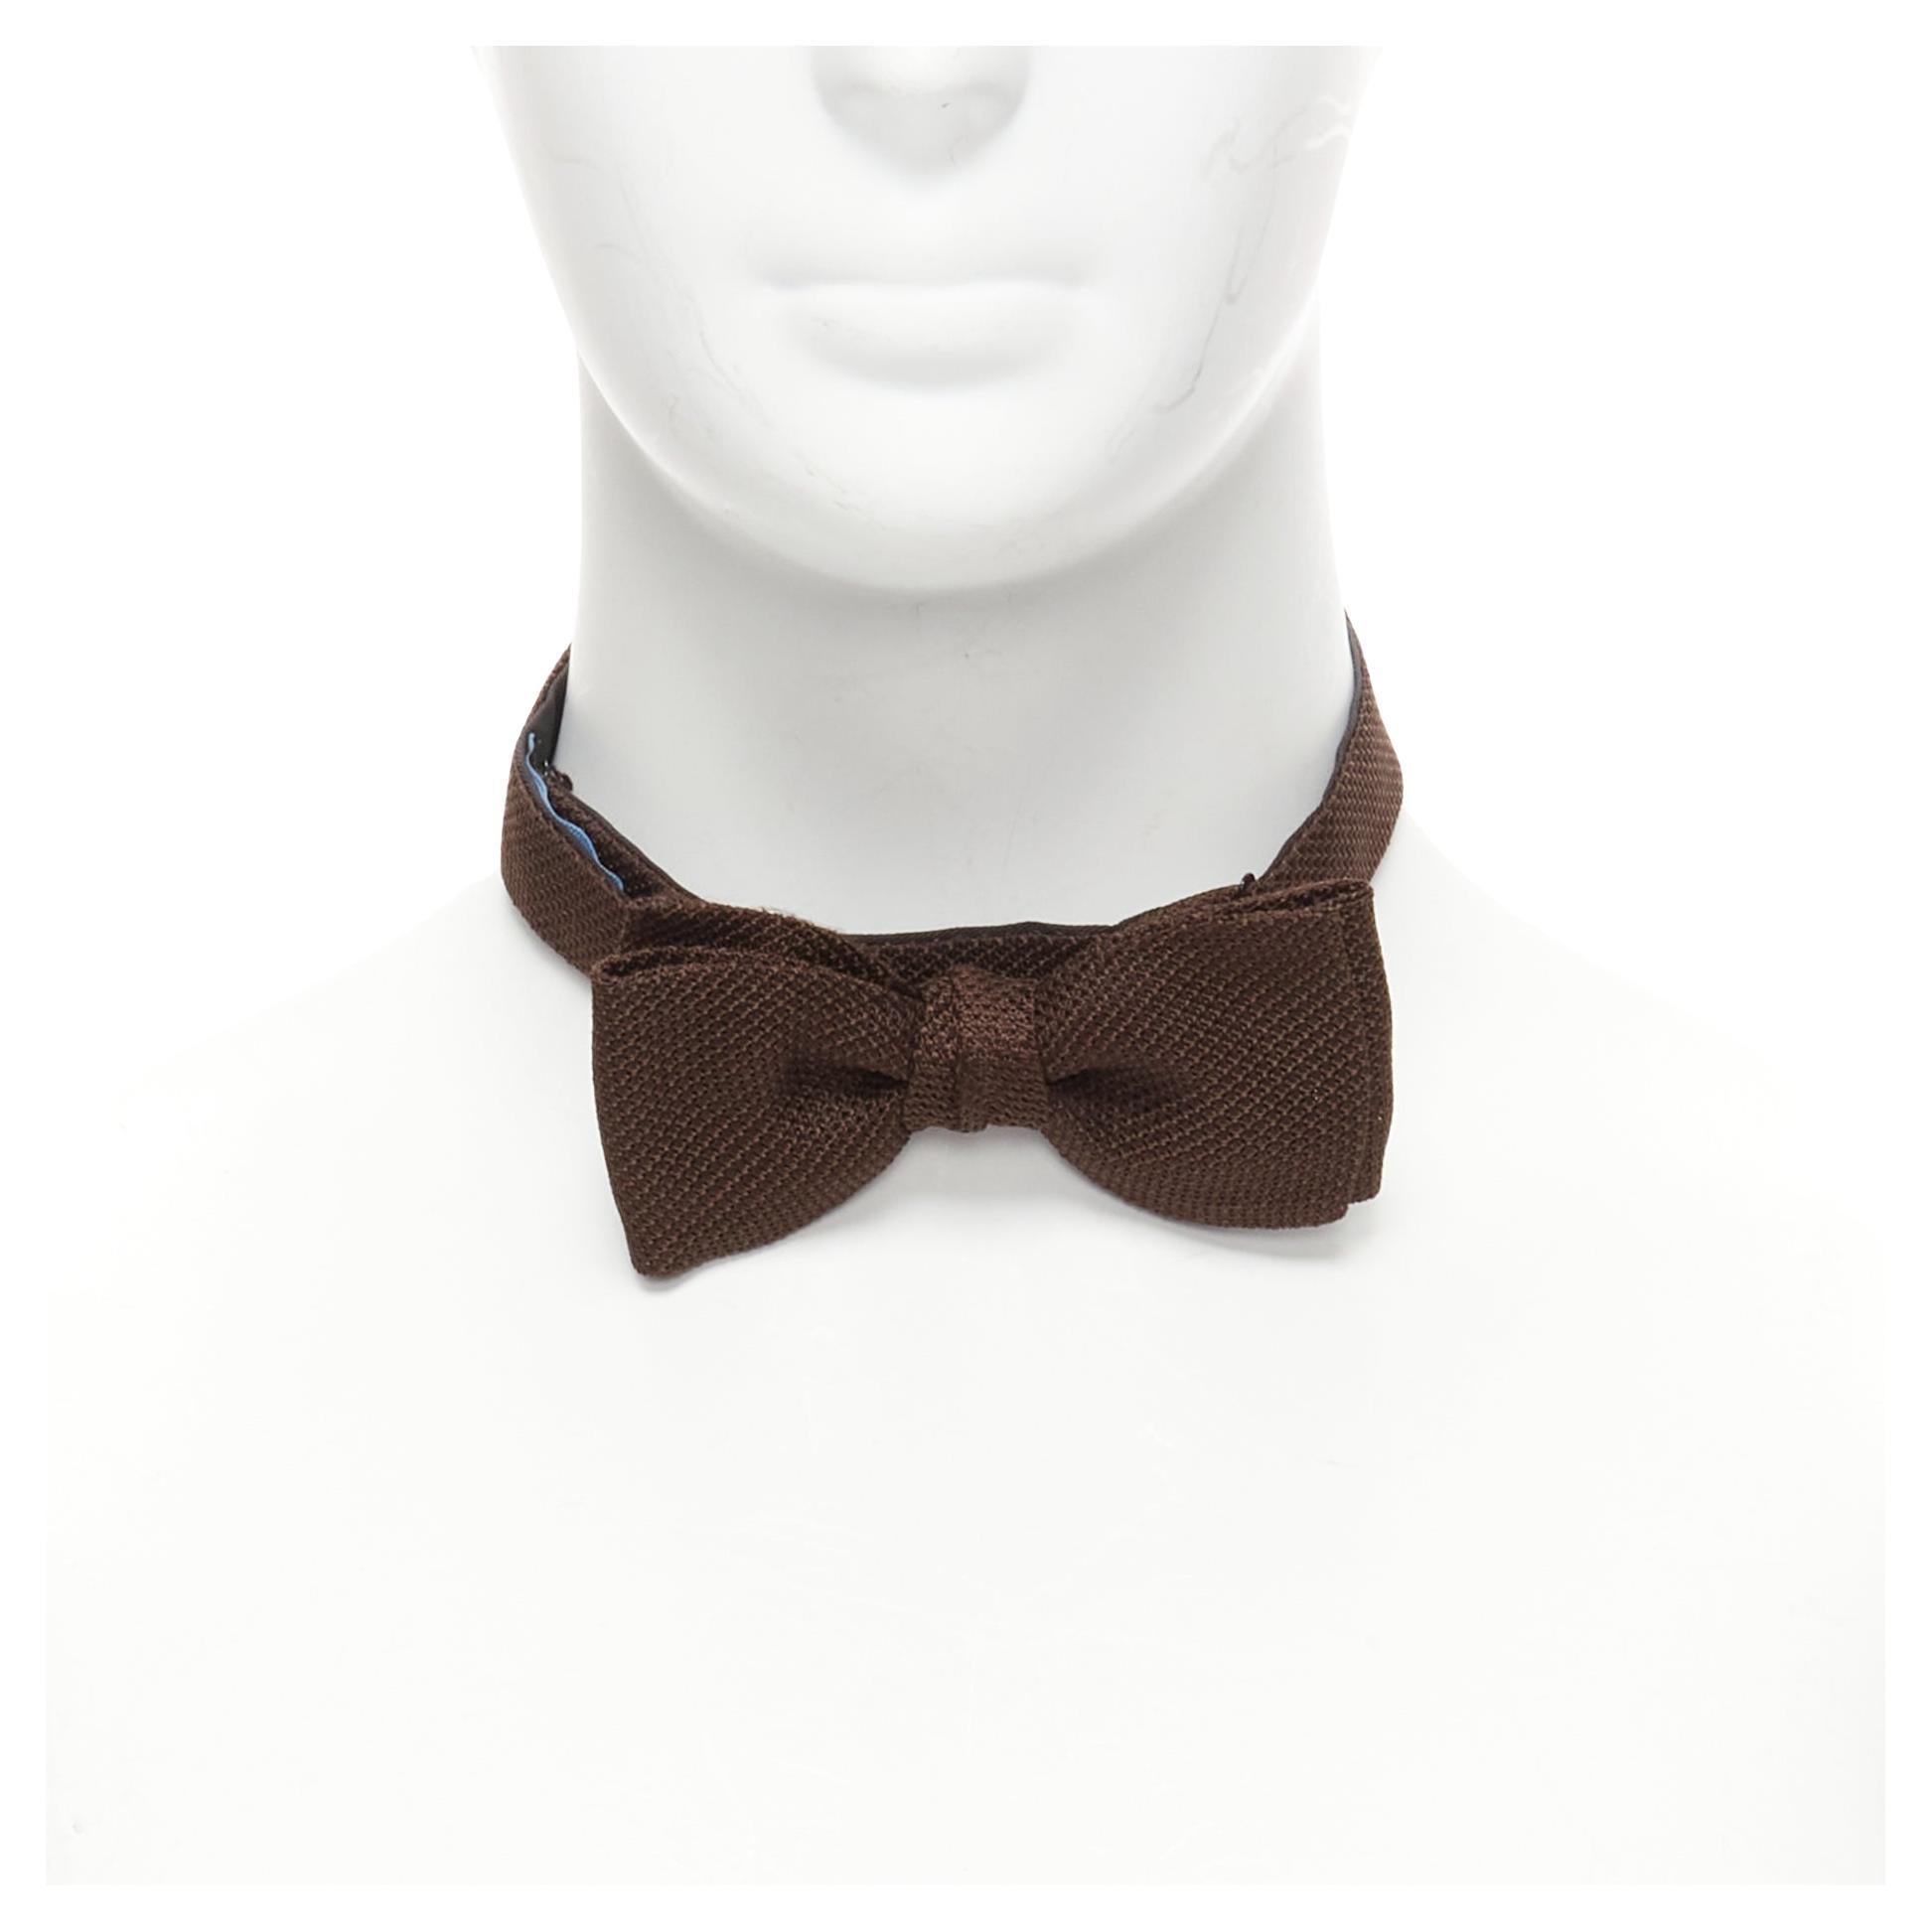 new LANVIN Alber Elbaz brown textured fabric bow tie Adjustable